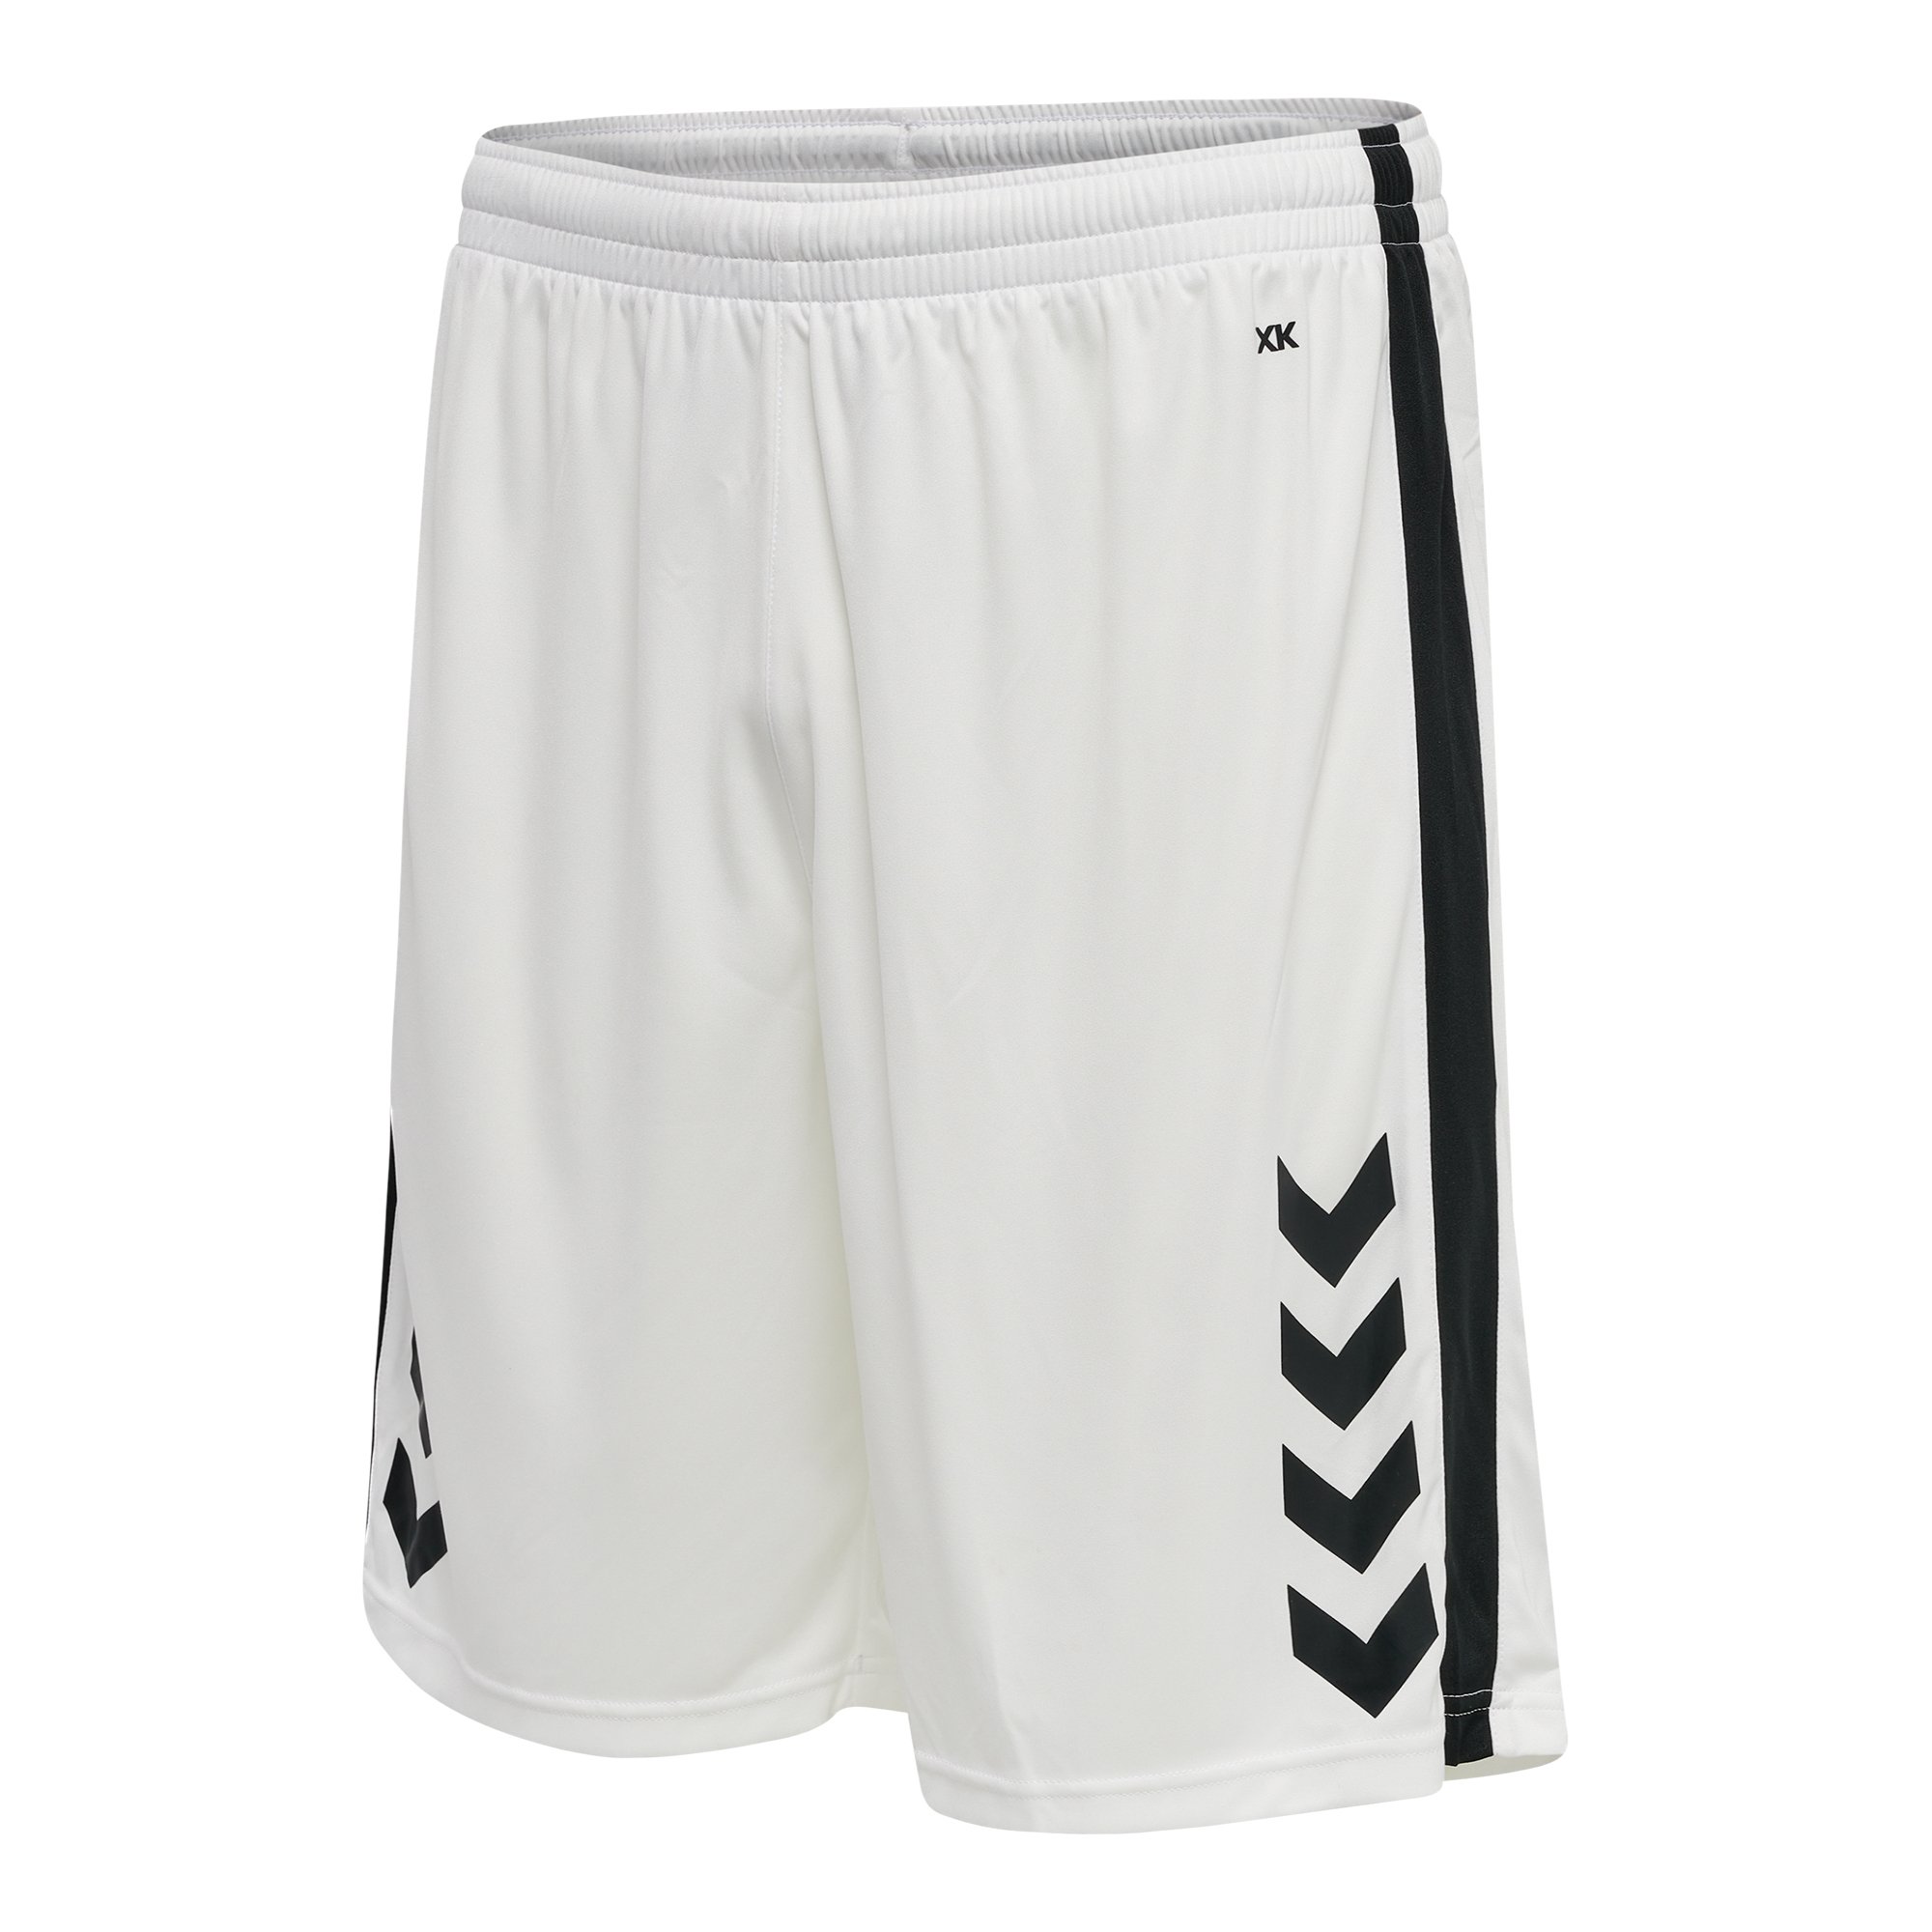 Hummel Core XK Basket Shorts